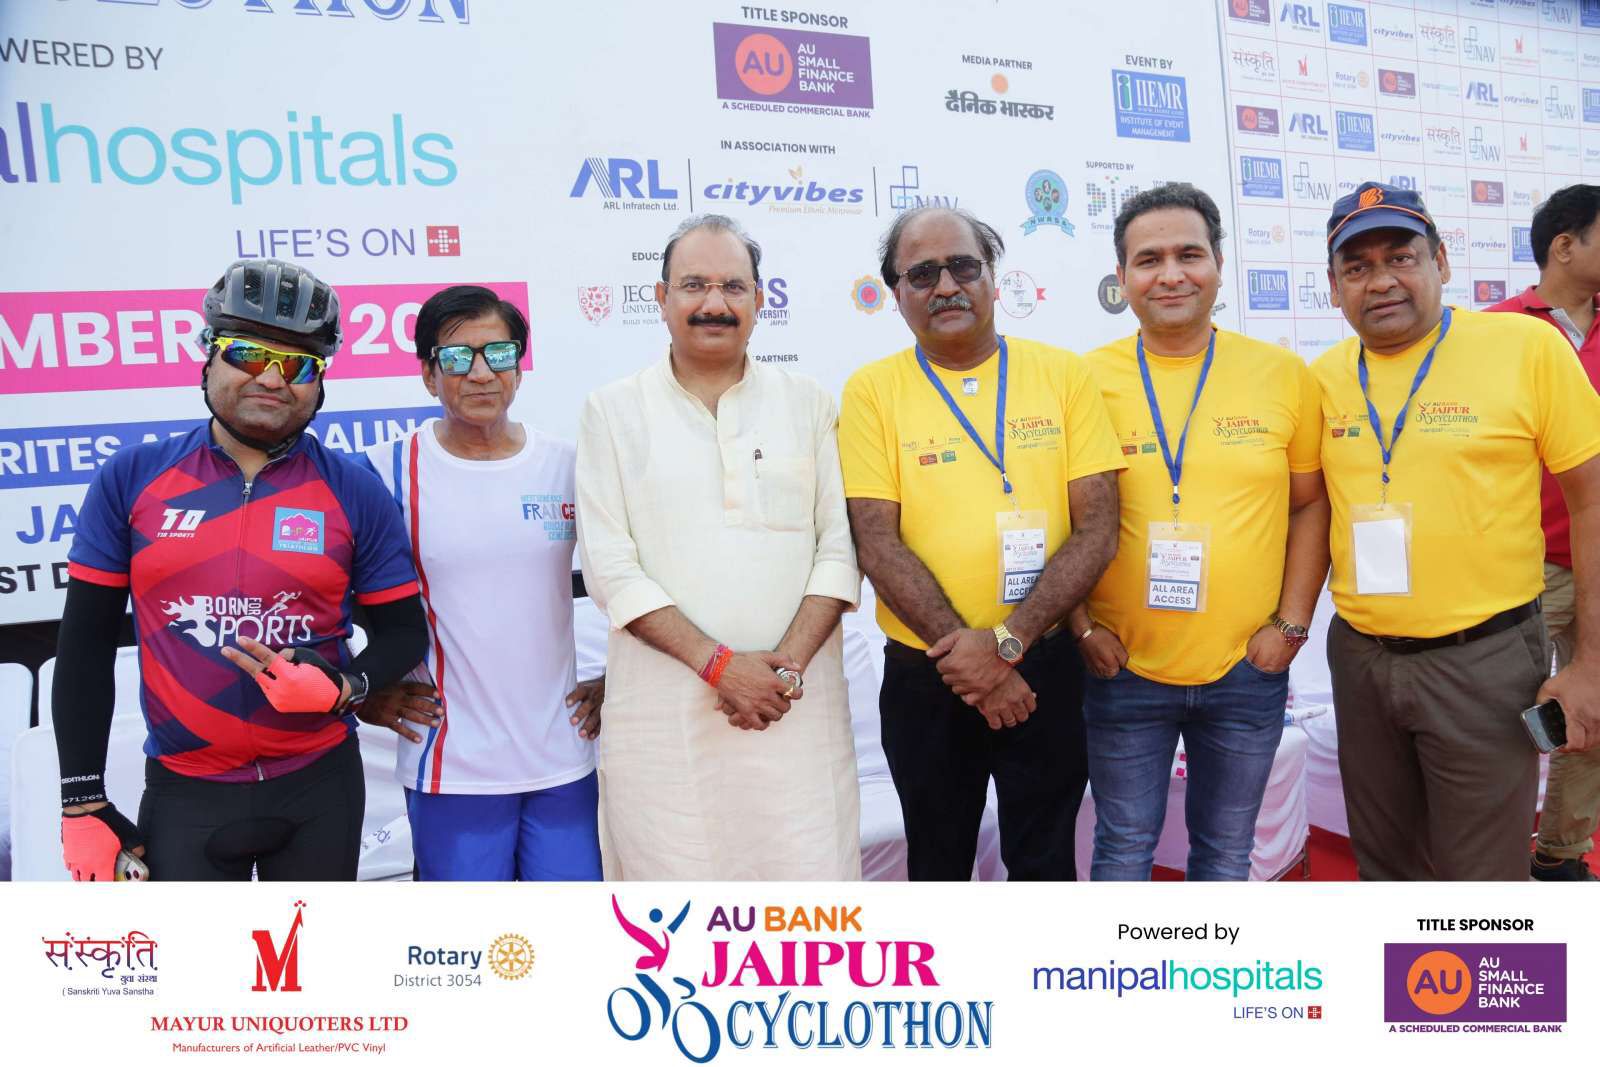 Jaipur Cyclothon